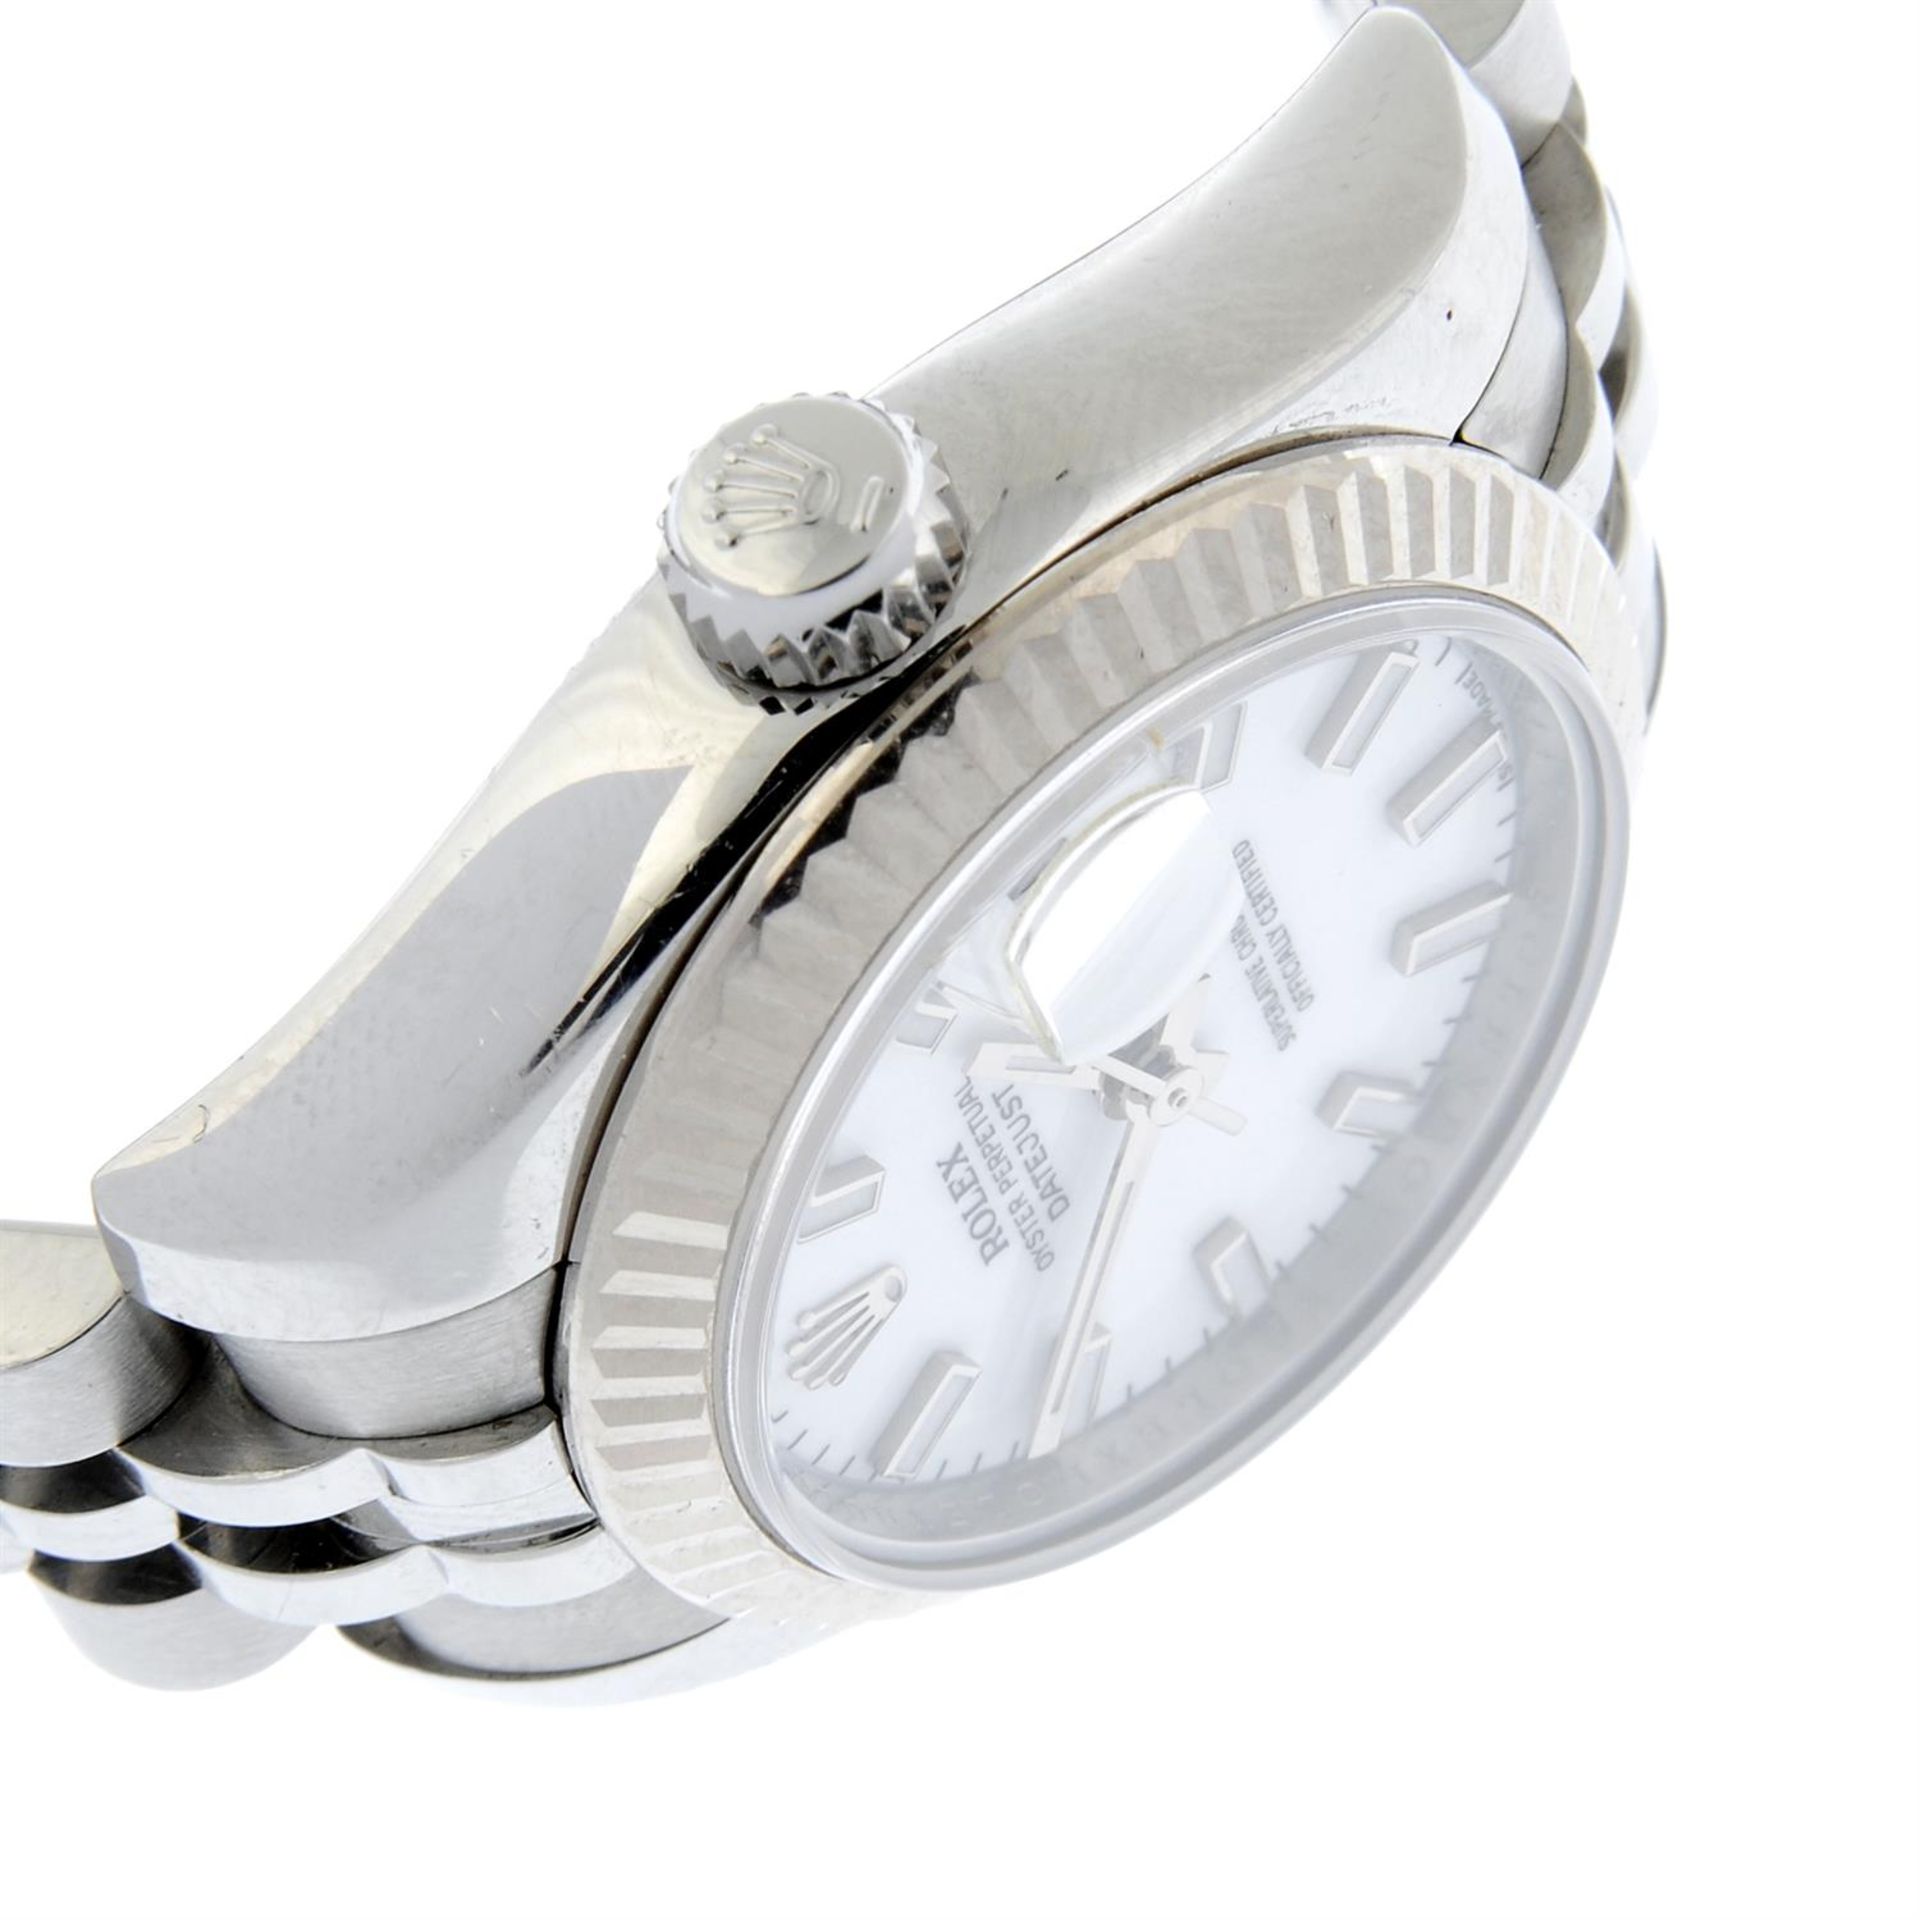 ROLEX - a bi-metal Oyster Perpetual Datejust bracelet watch, 26mm. - Image 3 of 5